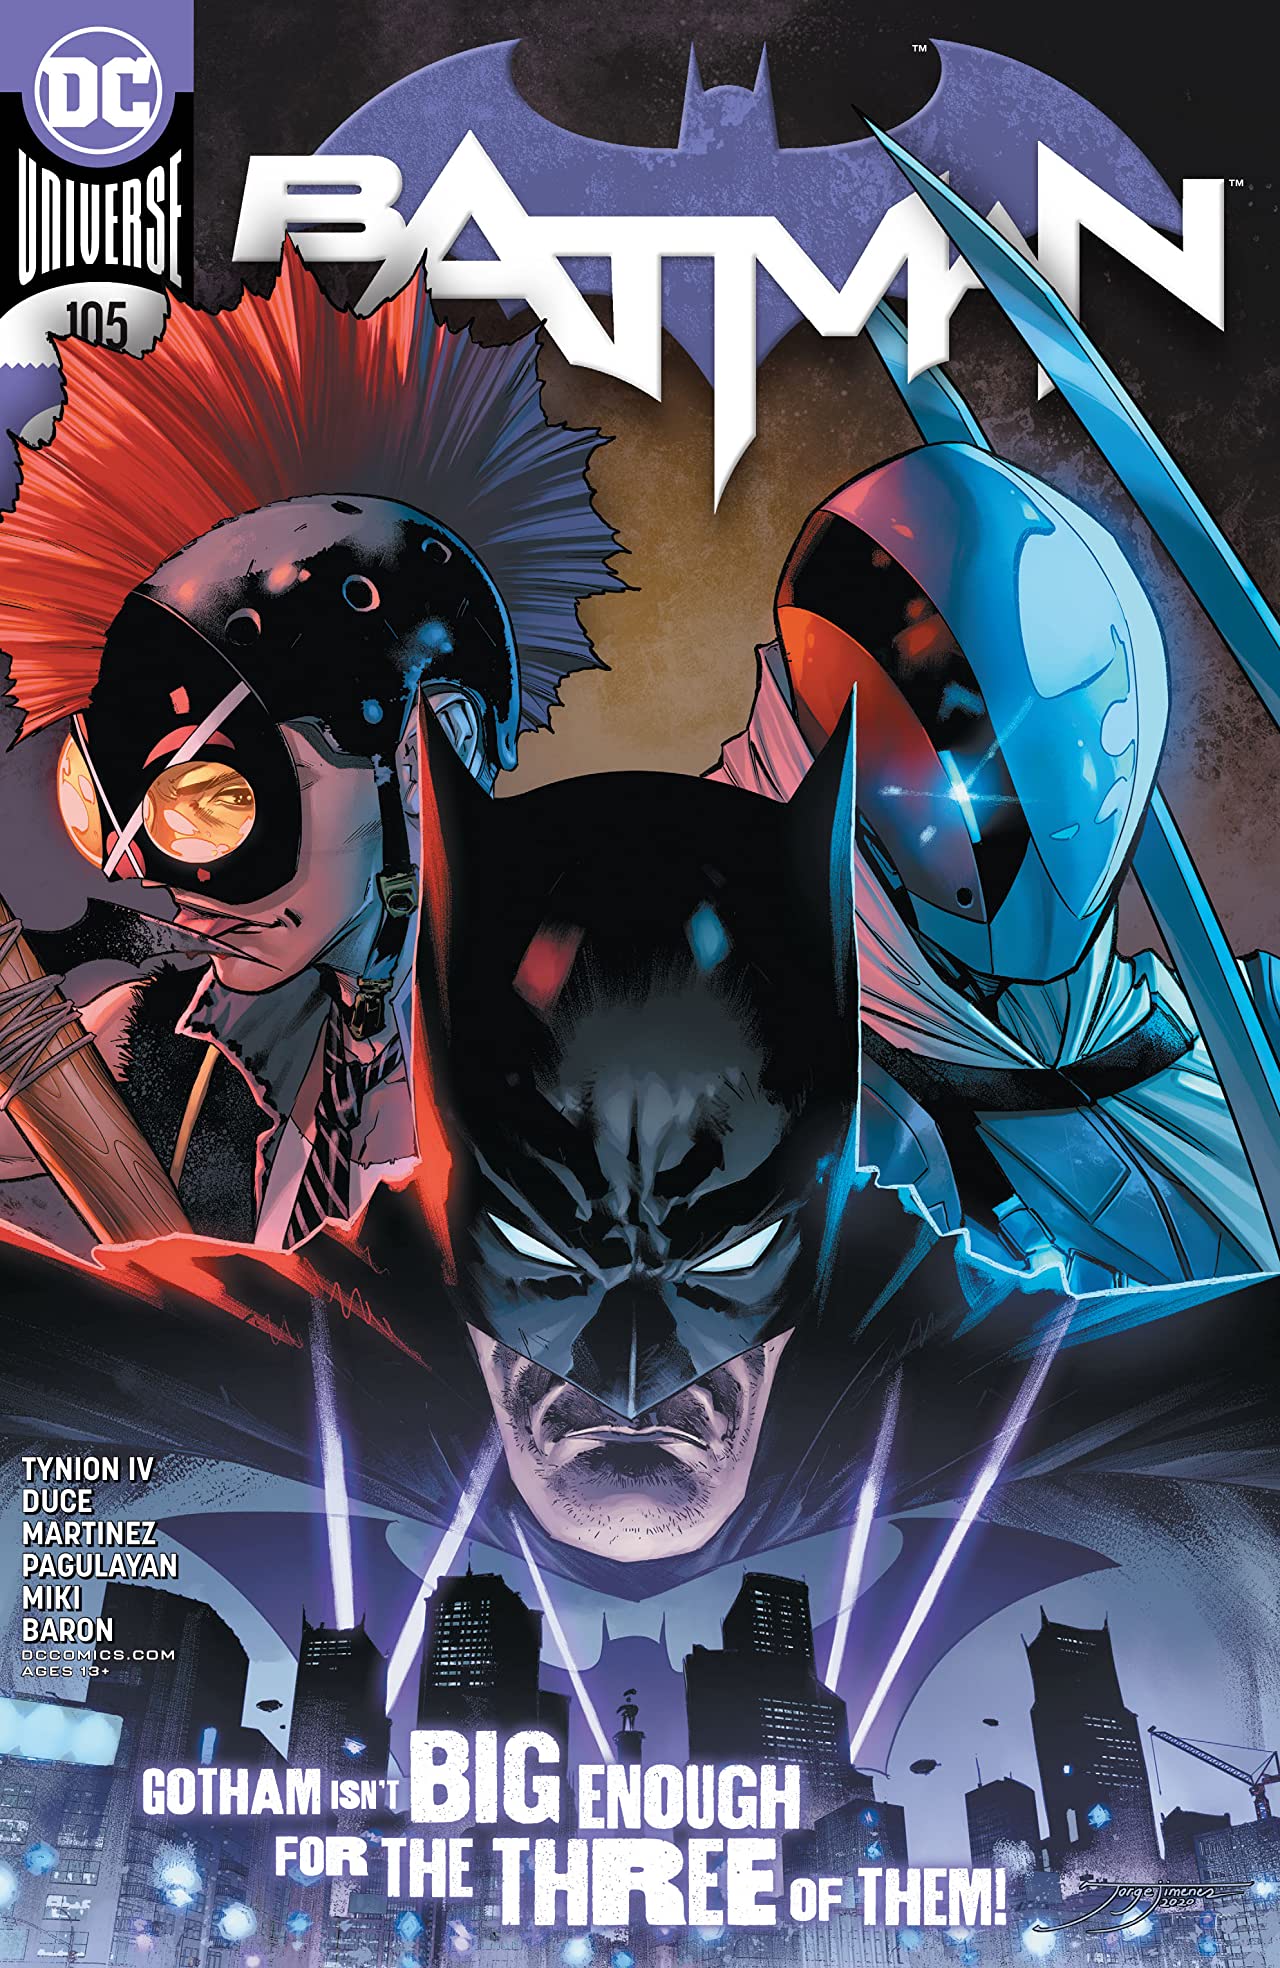 Review: Batman #105